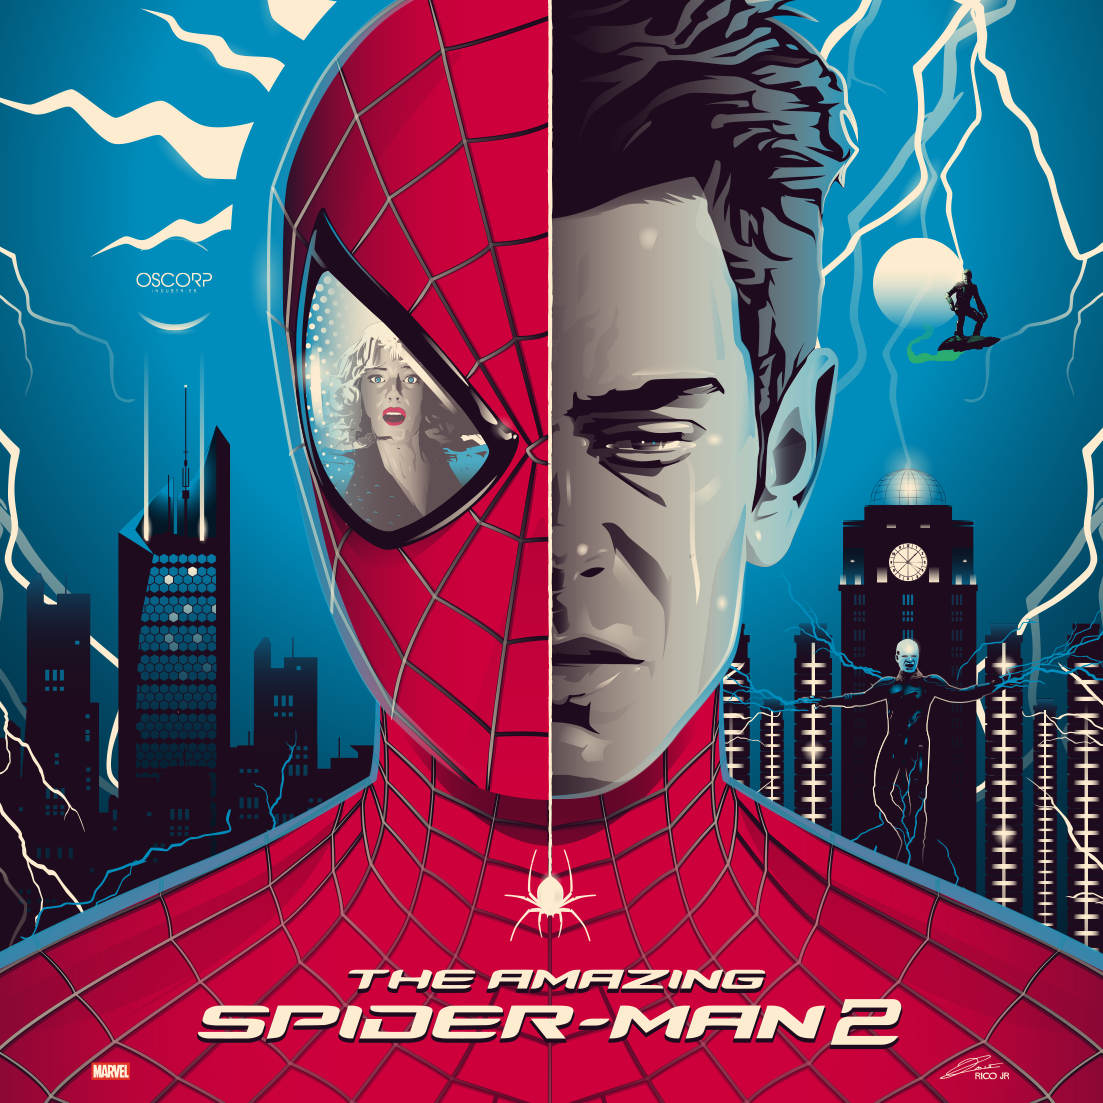 THE AMAZING SPIDER-MAN Poster Art / Vinyl Cover :: Behance